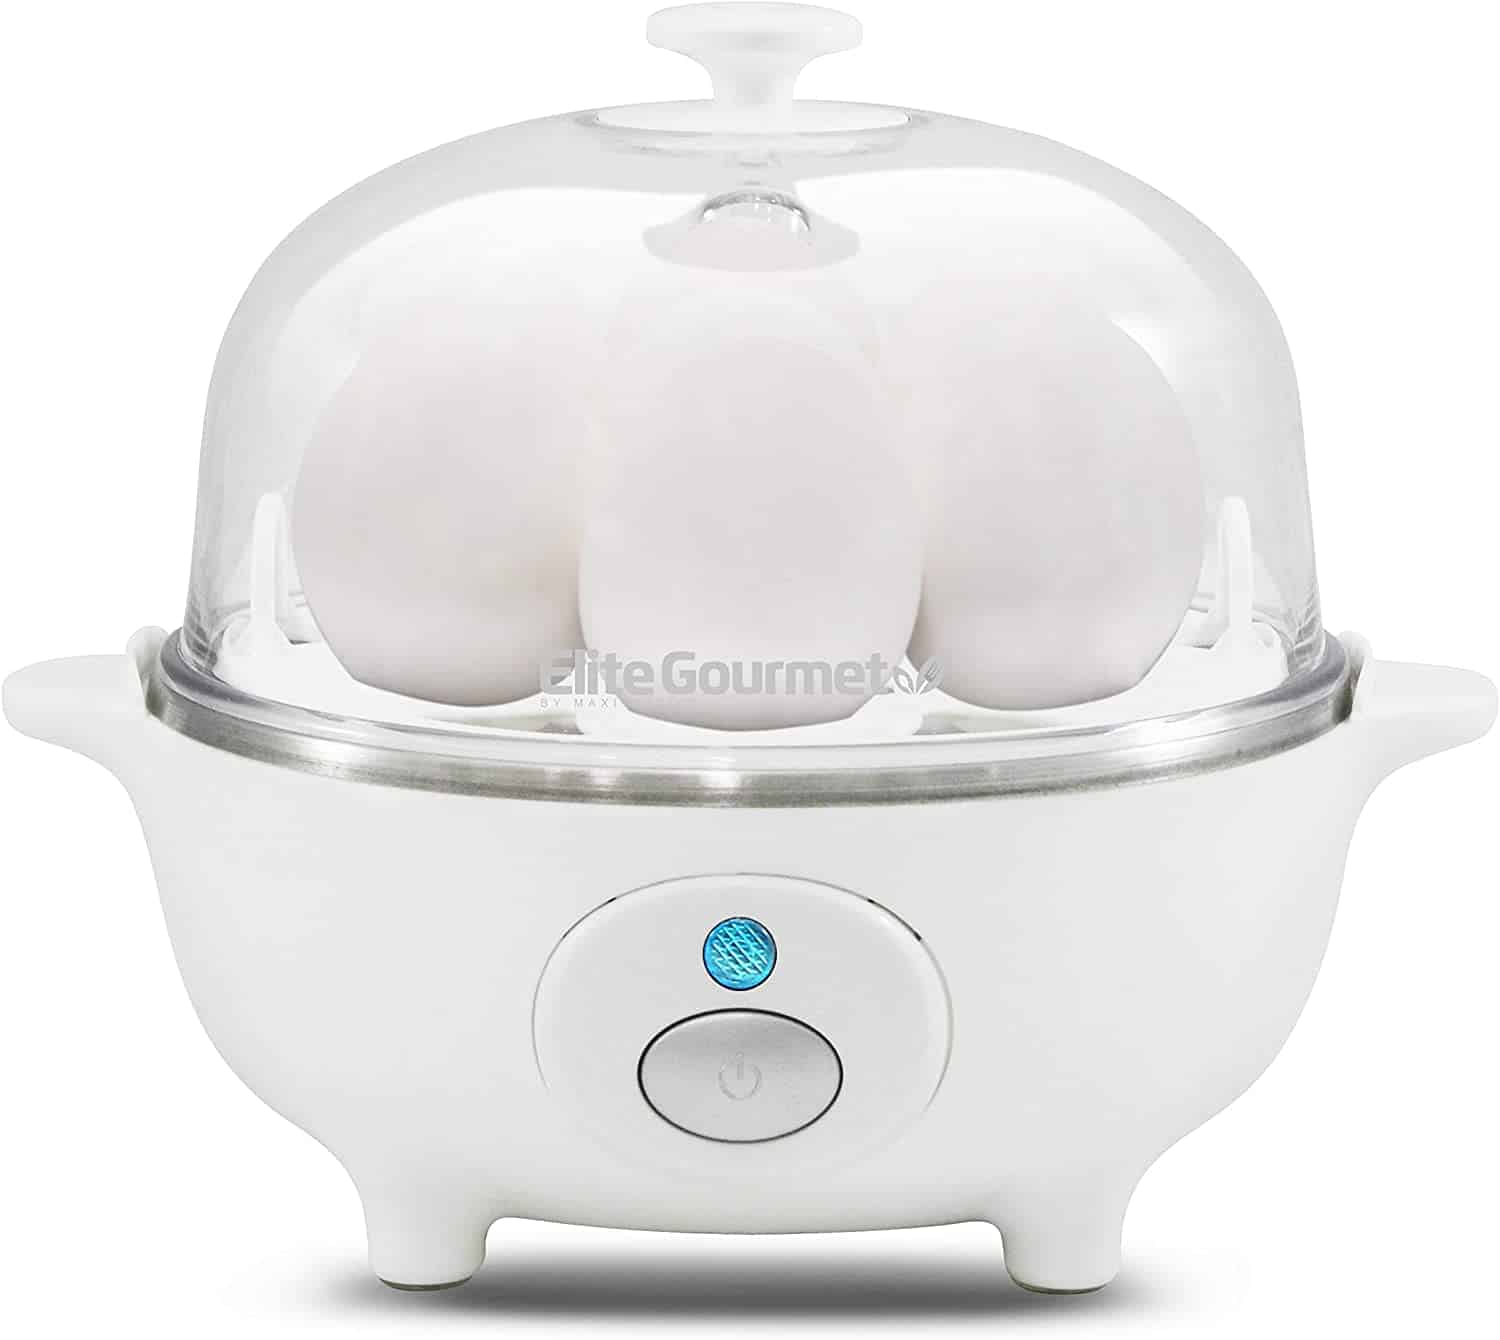 Amazon: Elite Gourmet Electric 7-Capacity Egg Boiler Cooker ONLY $14.99 {Reg $30}